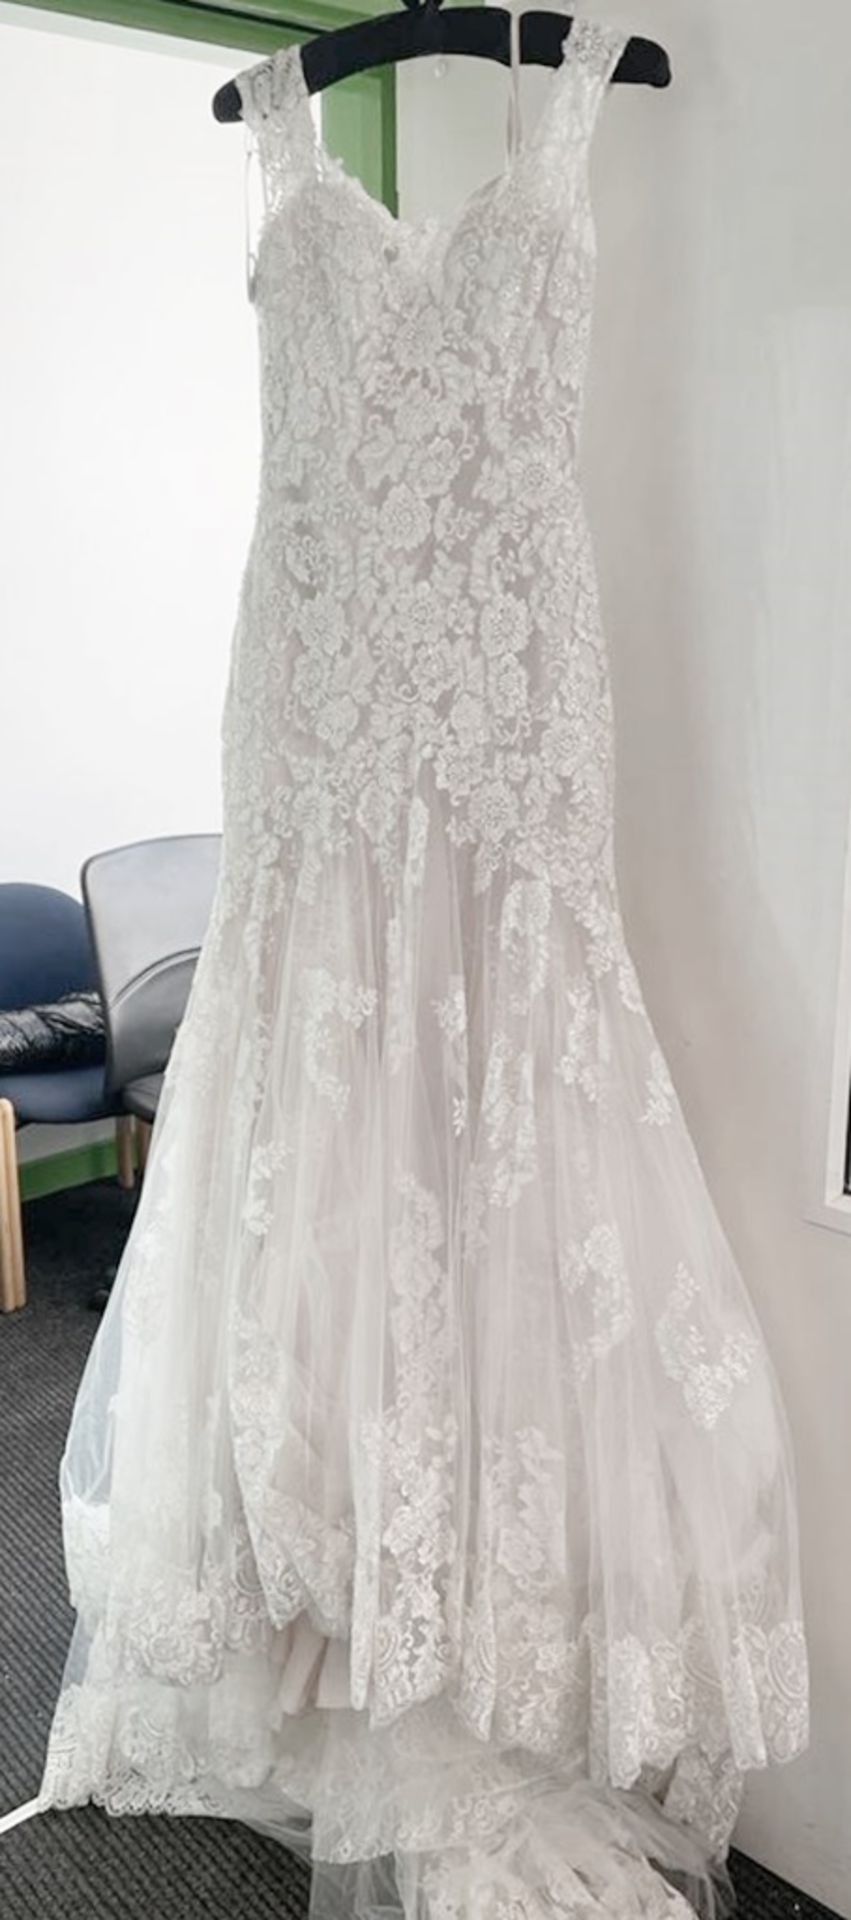 1 x DIANA LEGRANDE '7517' Designer Wedding Dress Bridal Gown - Size: UK 10 - Original RRP £1,800 - Image 3 of 18